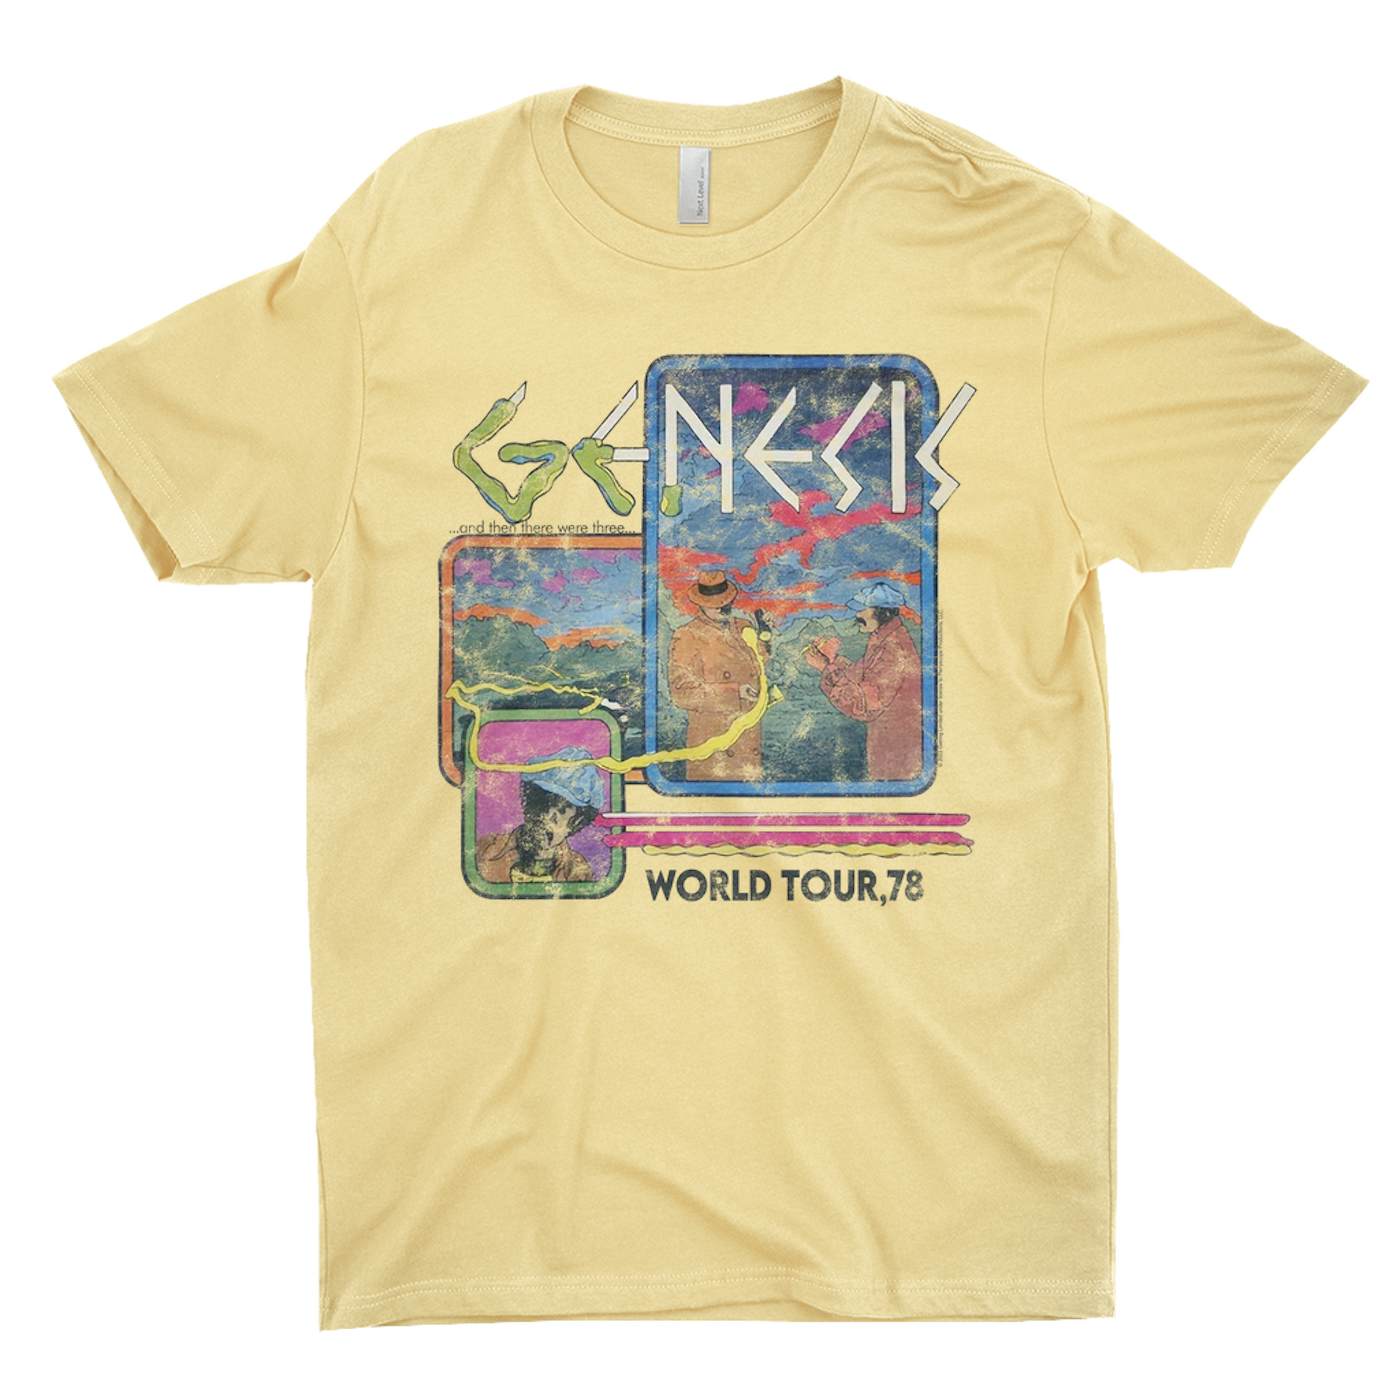 Pink Floyd T-Shirt | North American Tour 1994 Pink Floyd Shirt